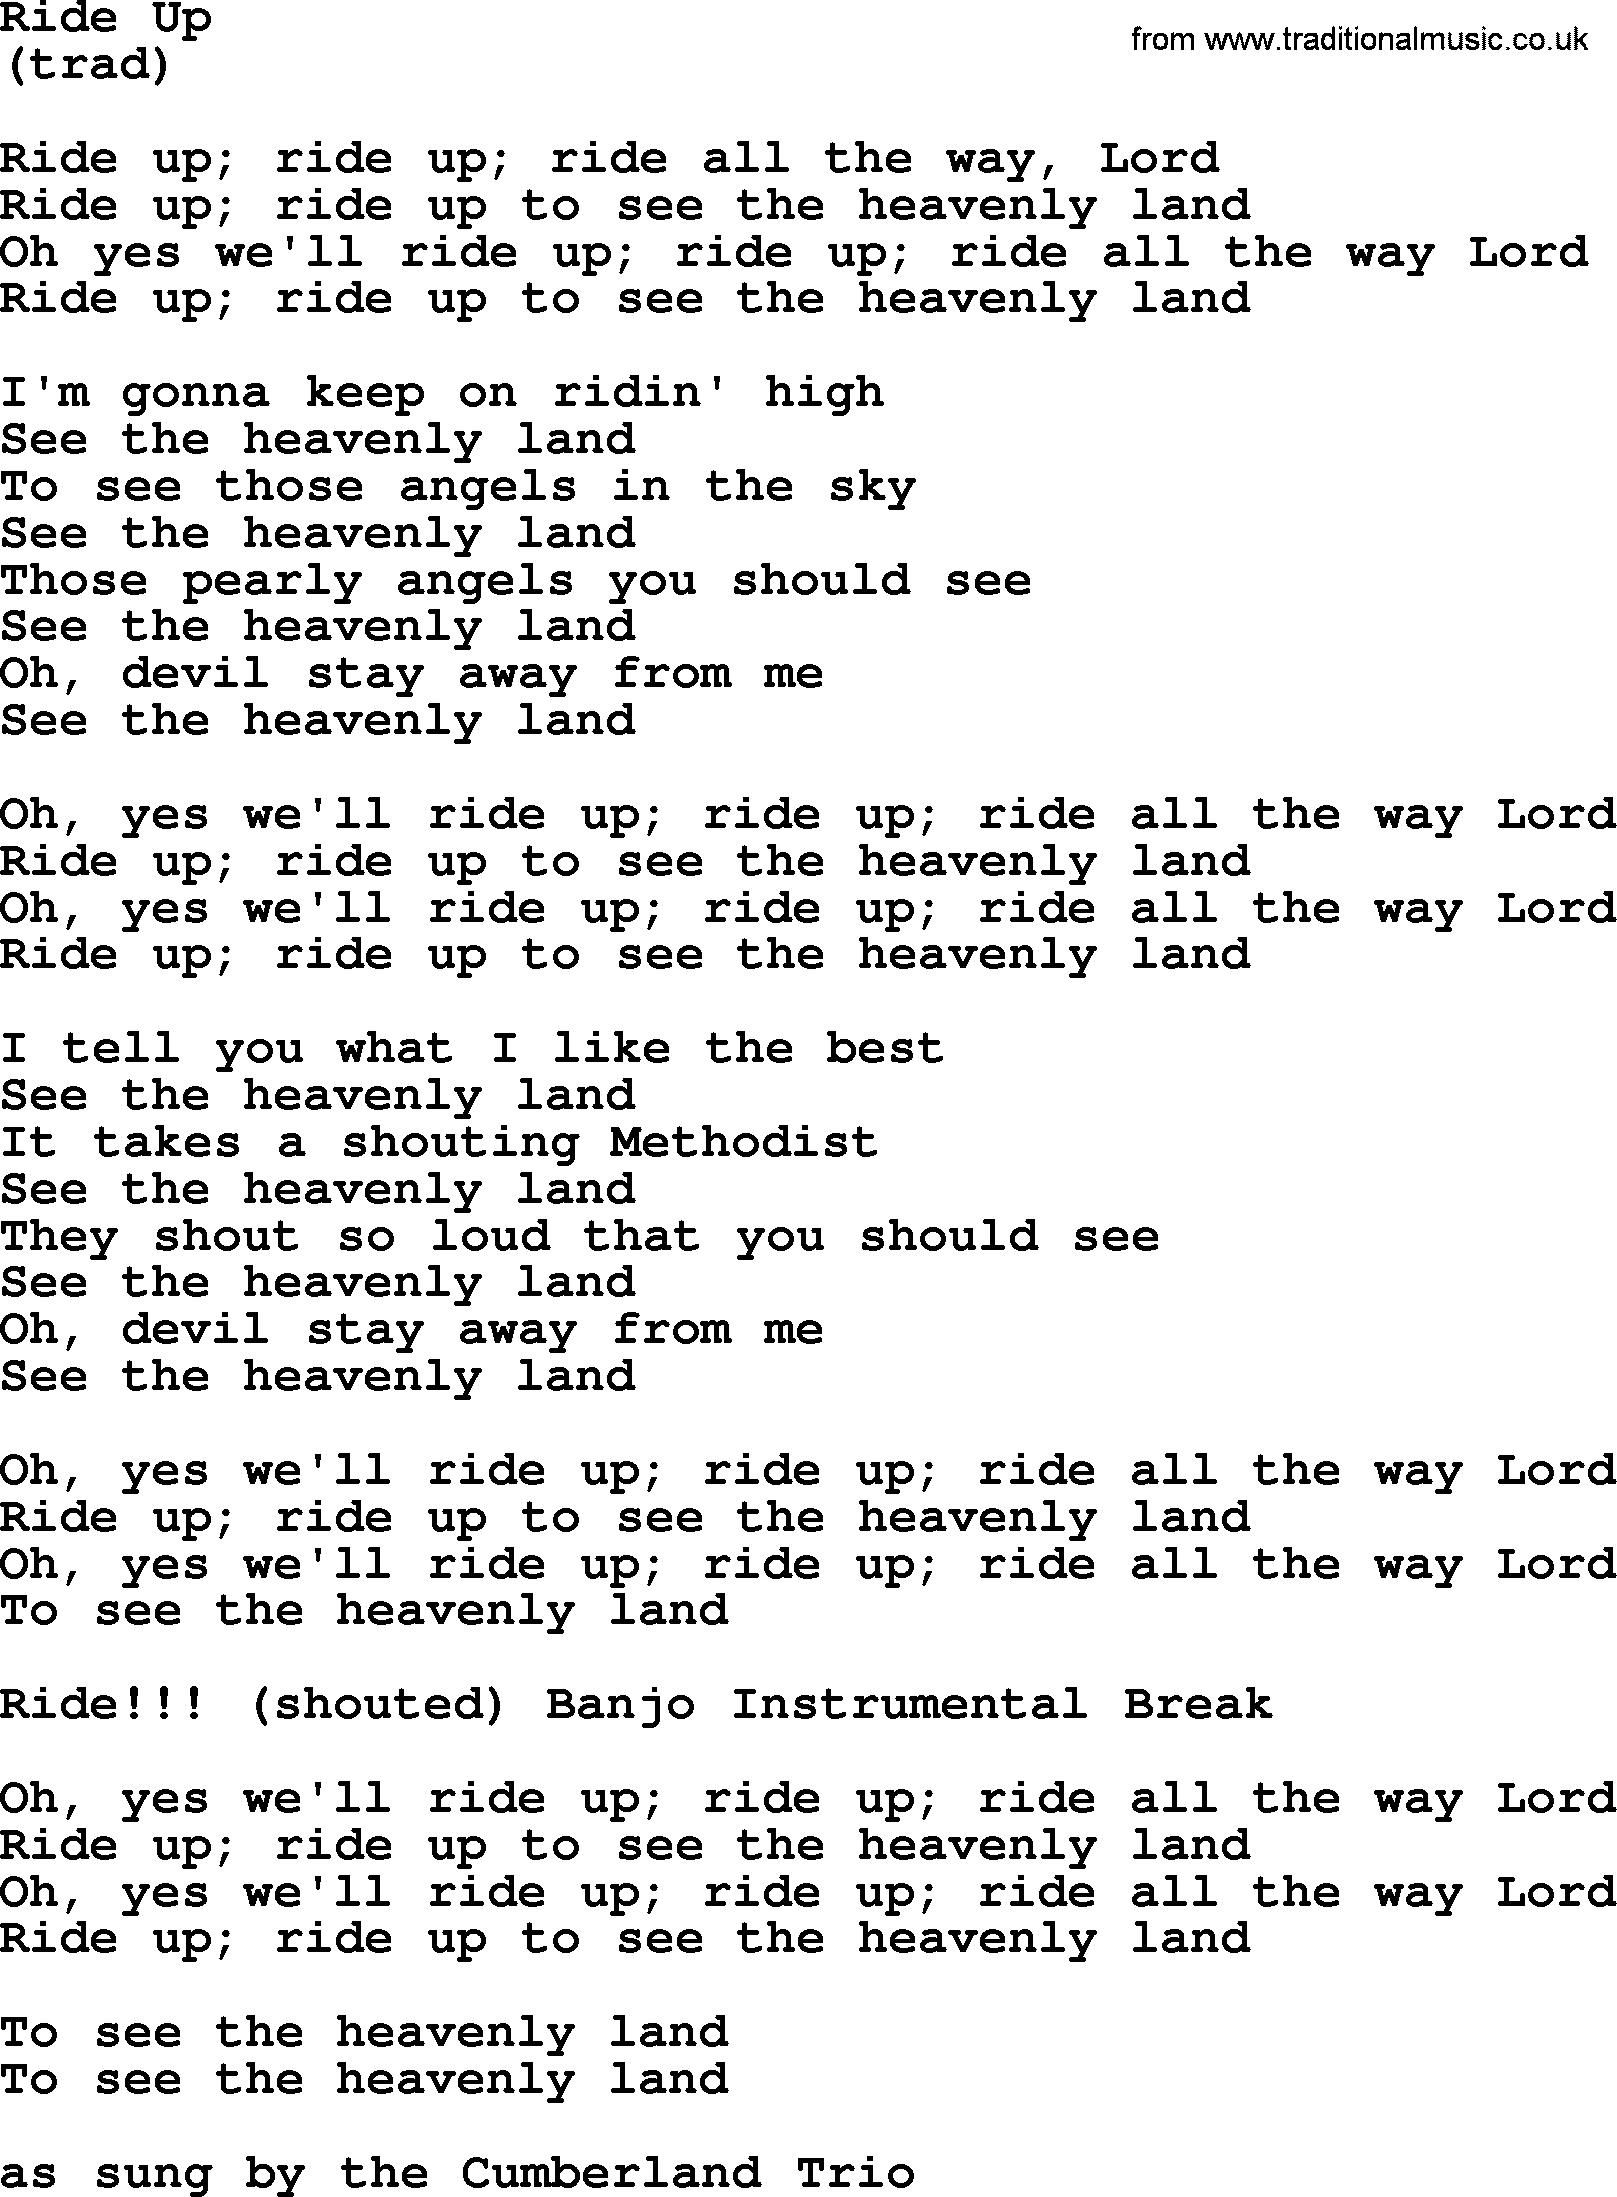 The Byrds song Ride Up, lyrics